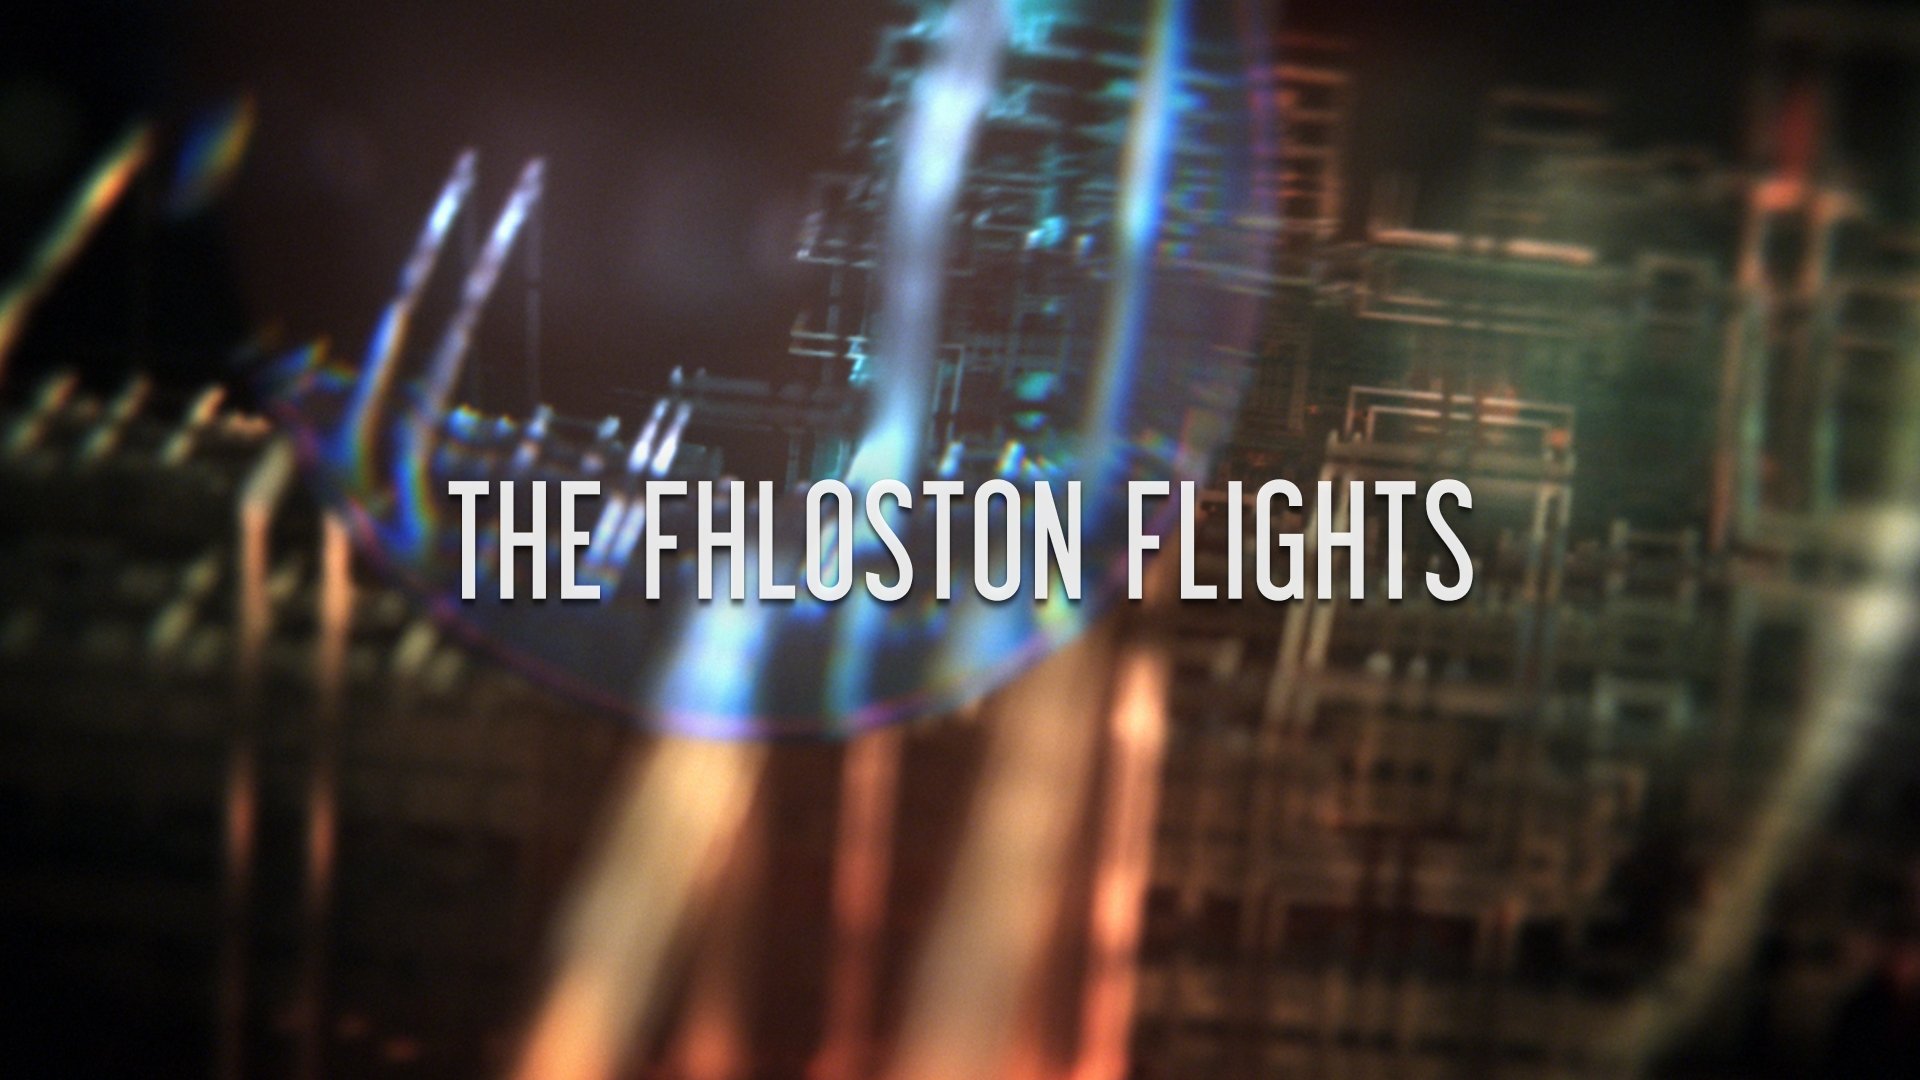 The Fhloston Flights